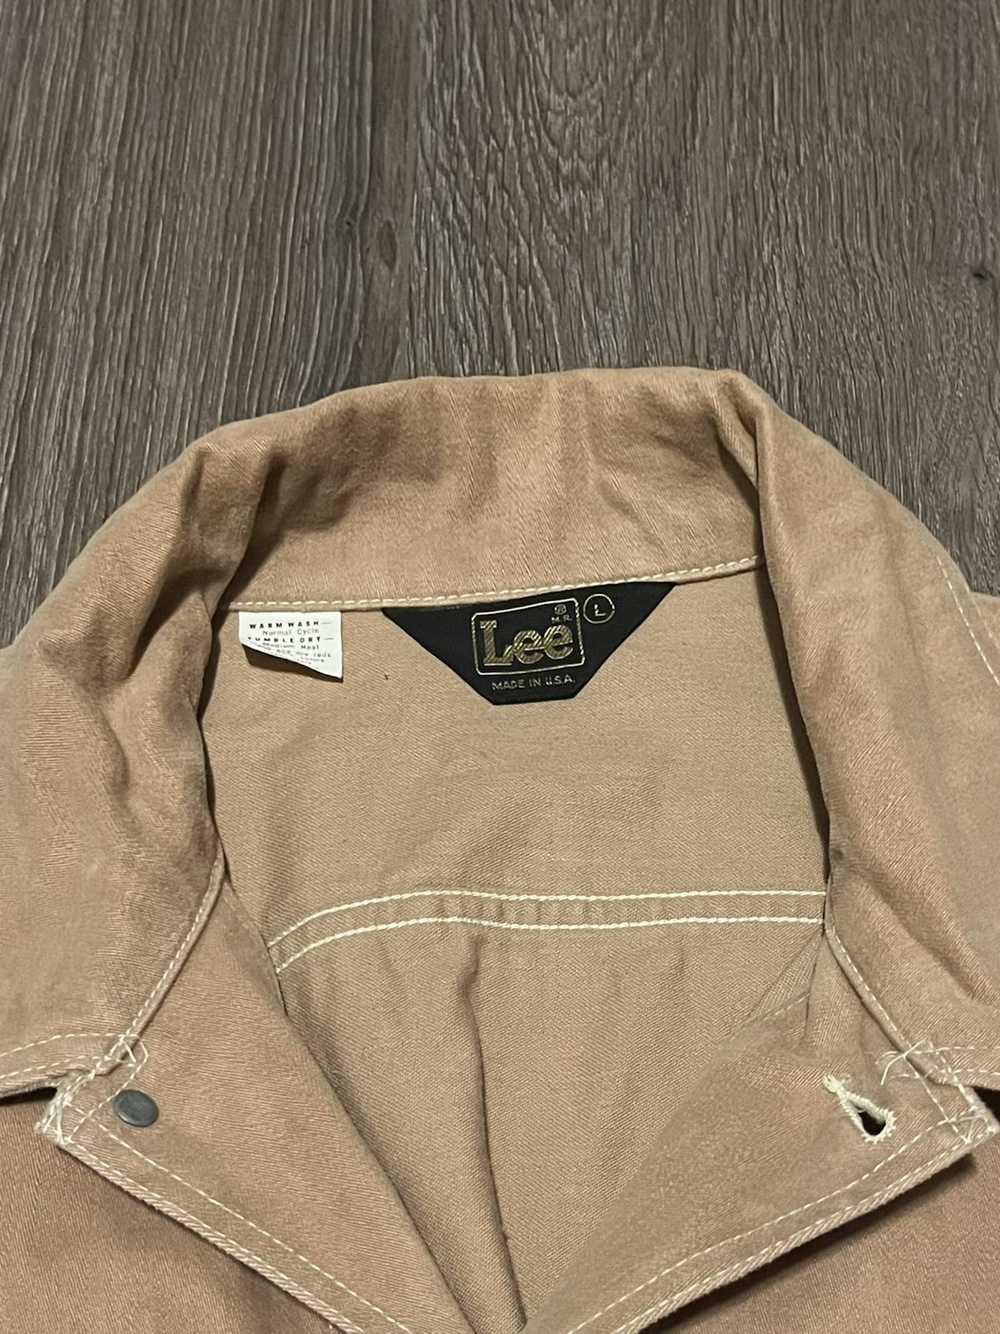 Lee × Vintage Vintage Lee Moleskin Jacket - image 3